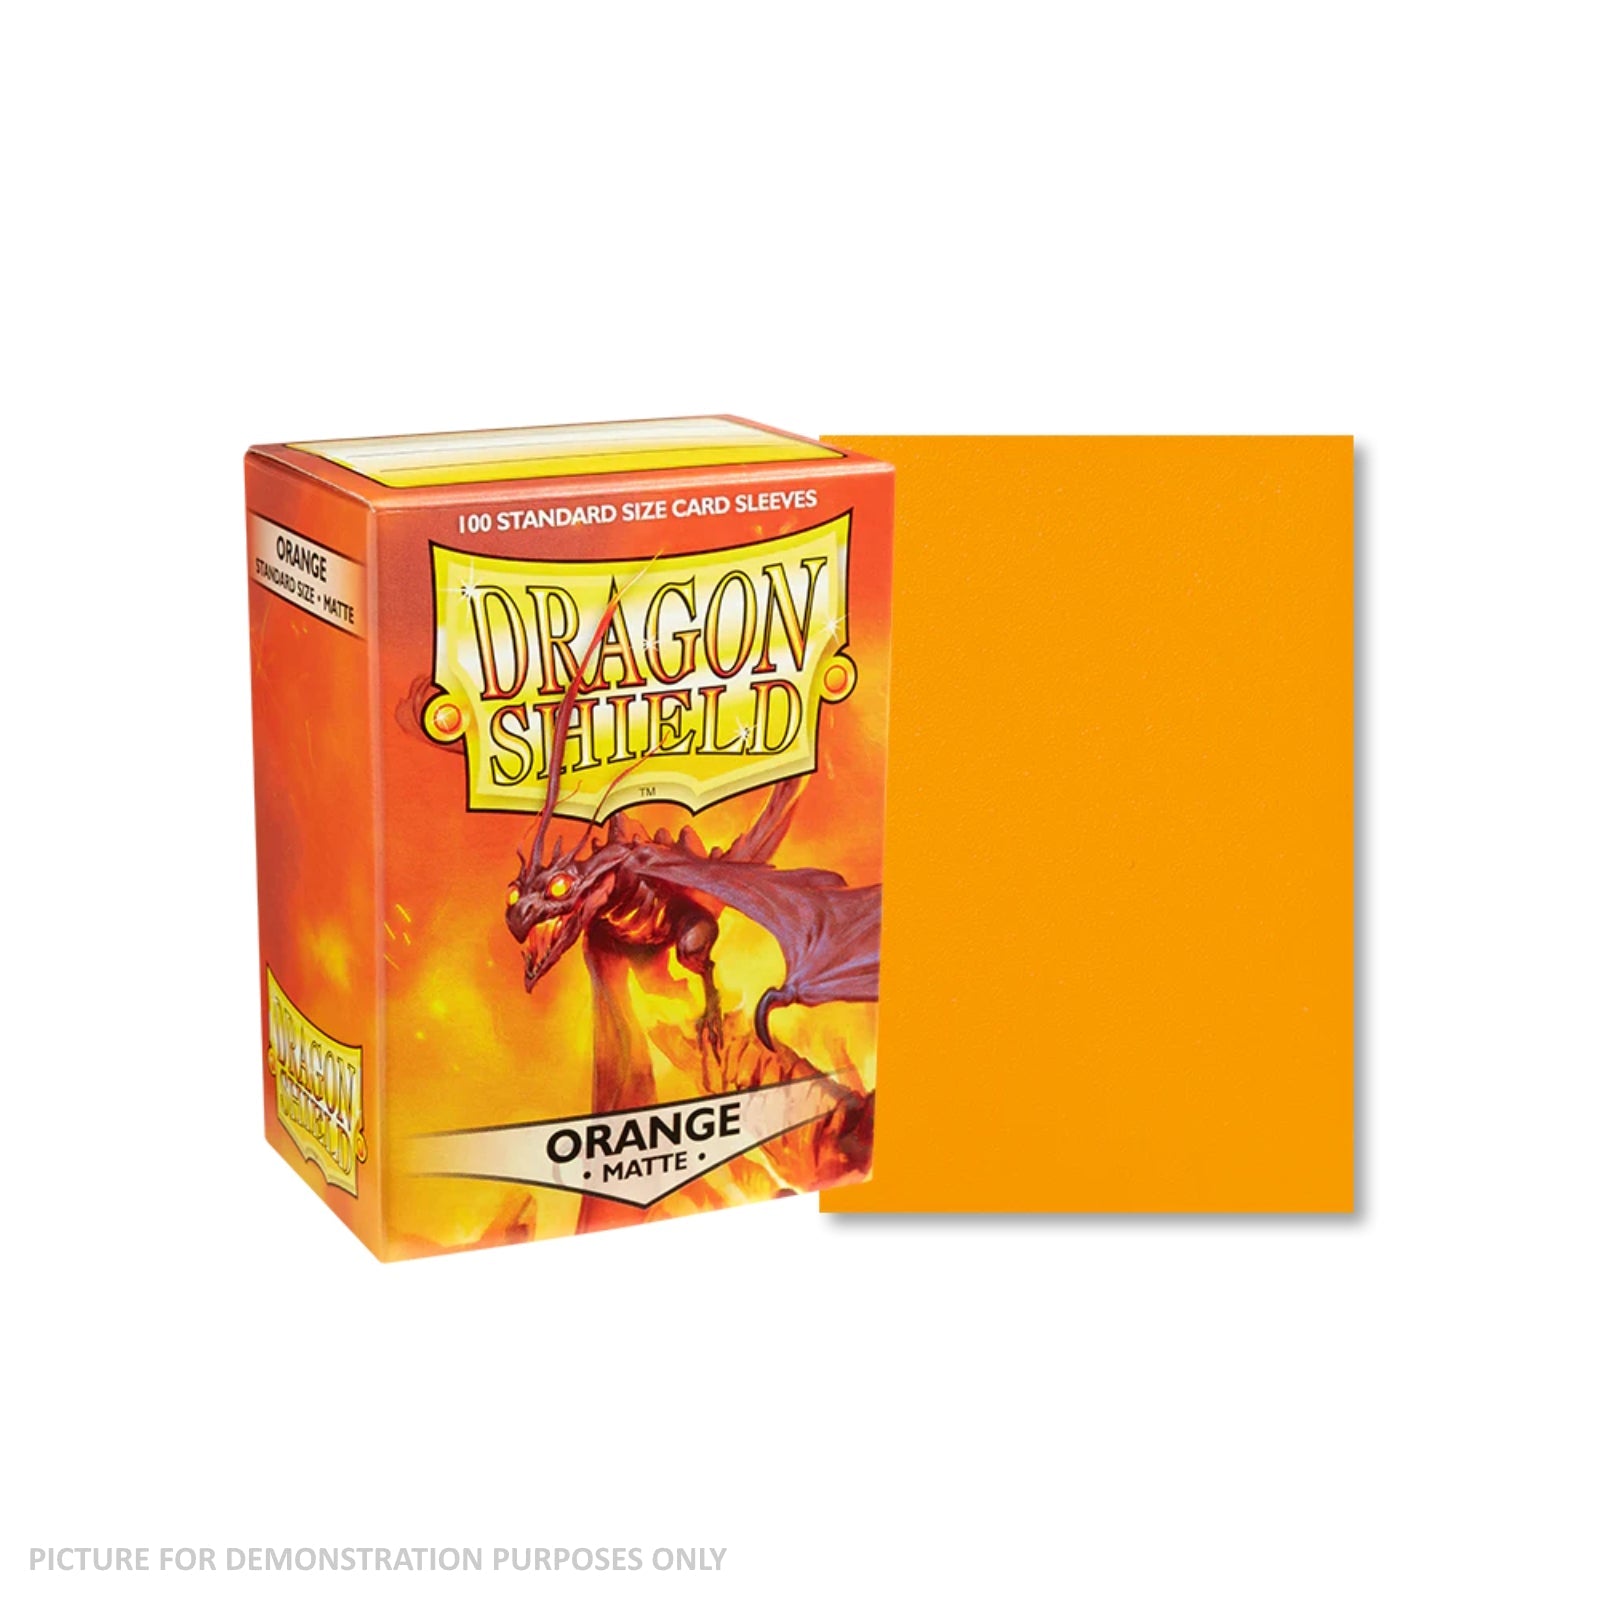 Dragon Shield 100 Standard Size Card Sleeves - Matte Orange